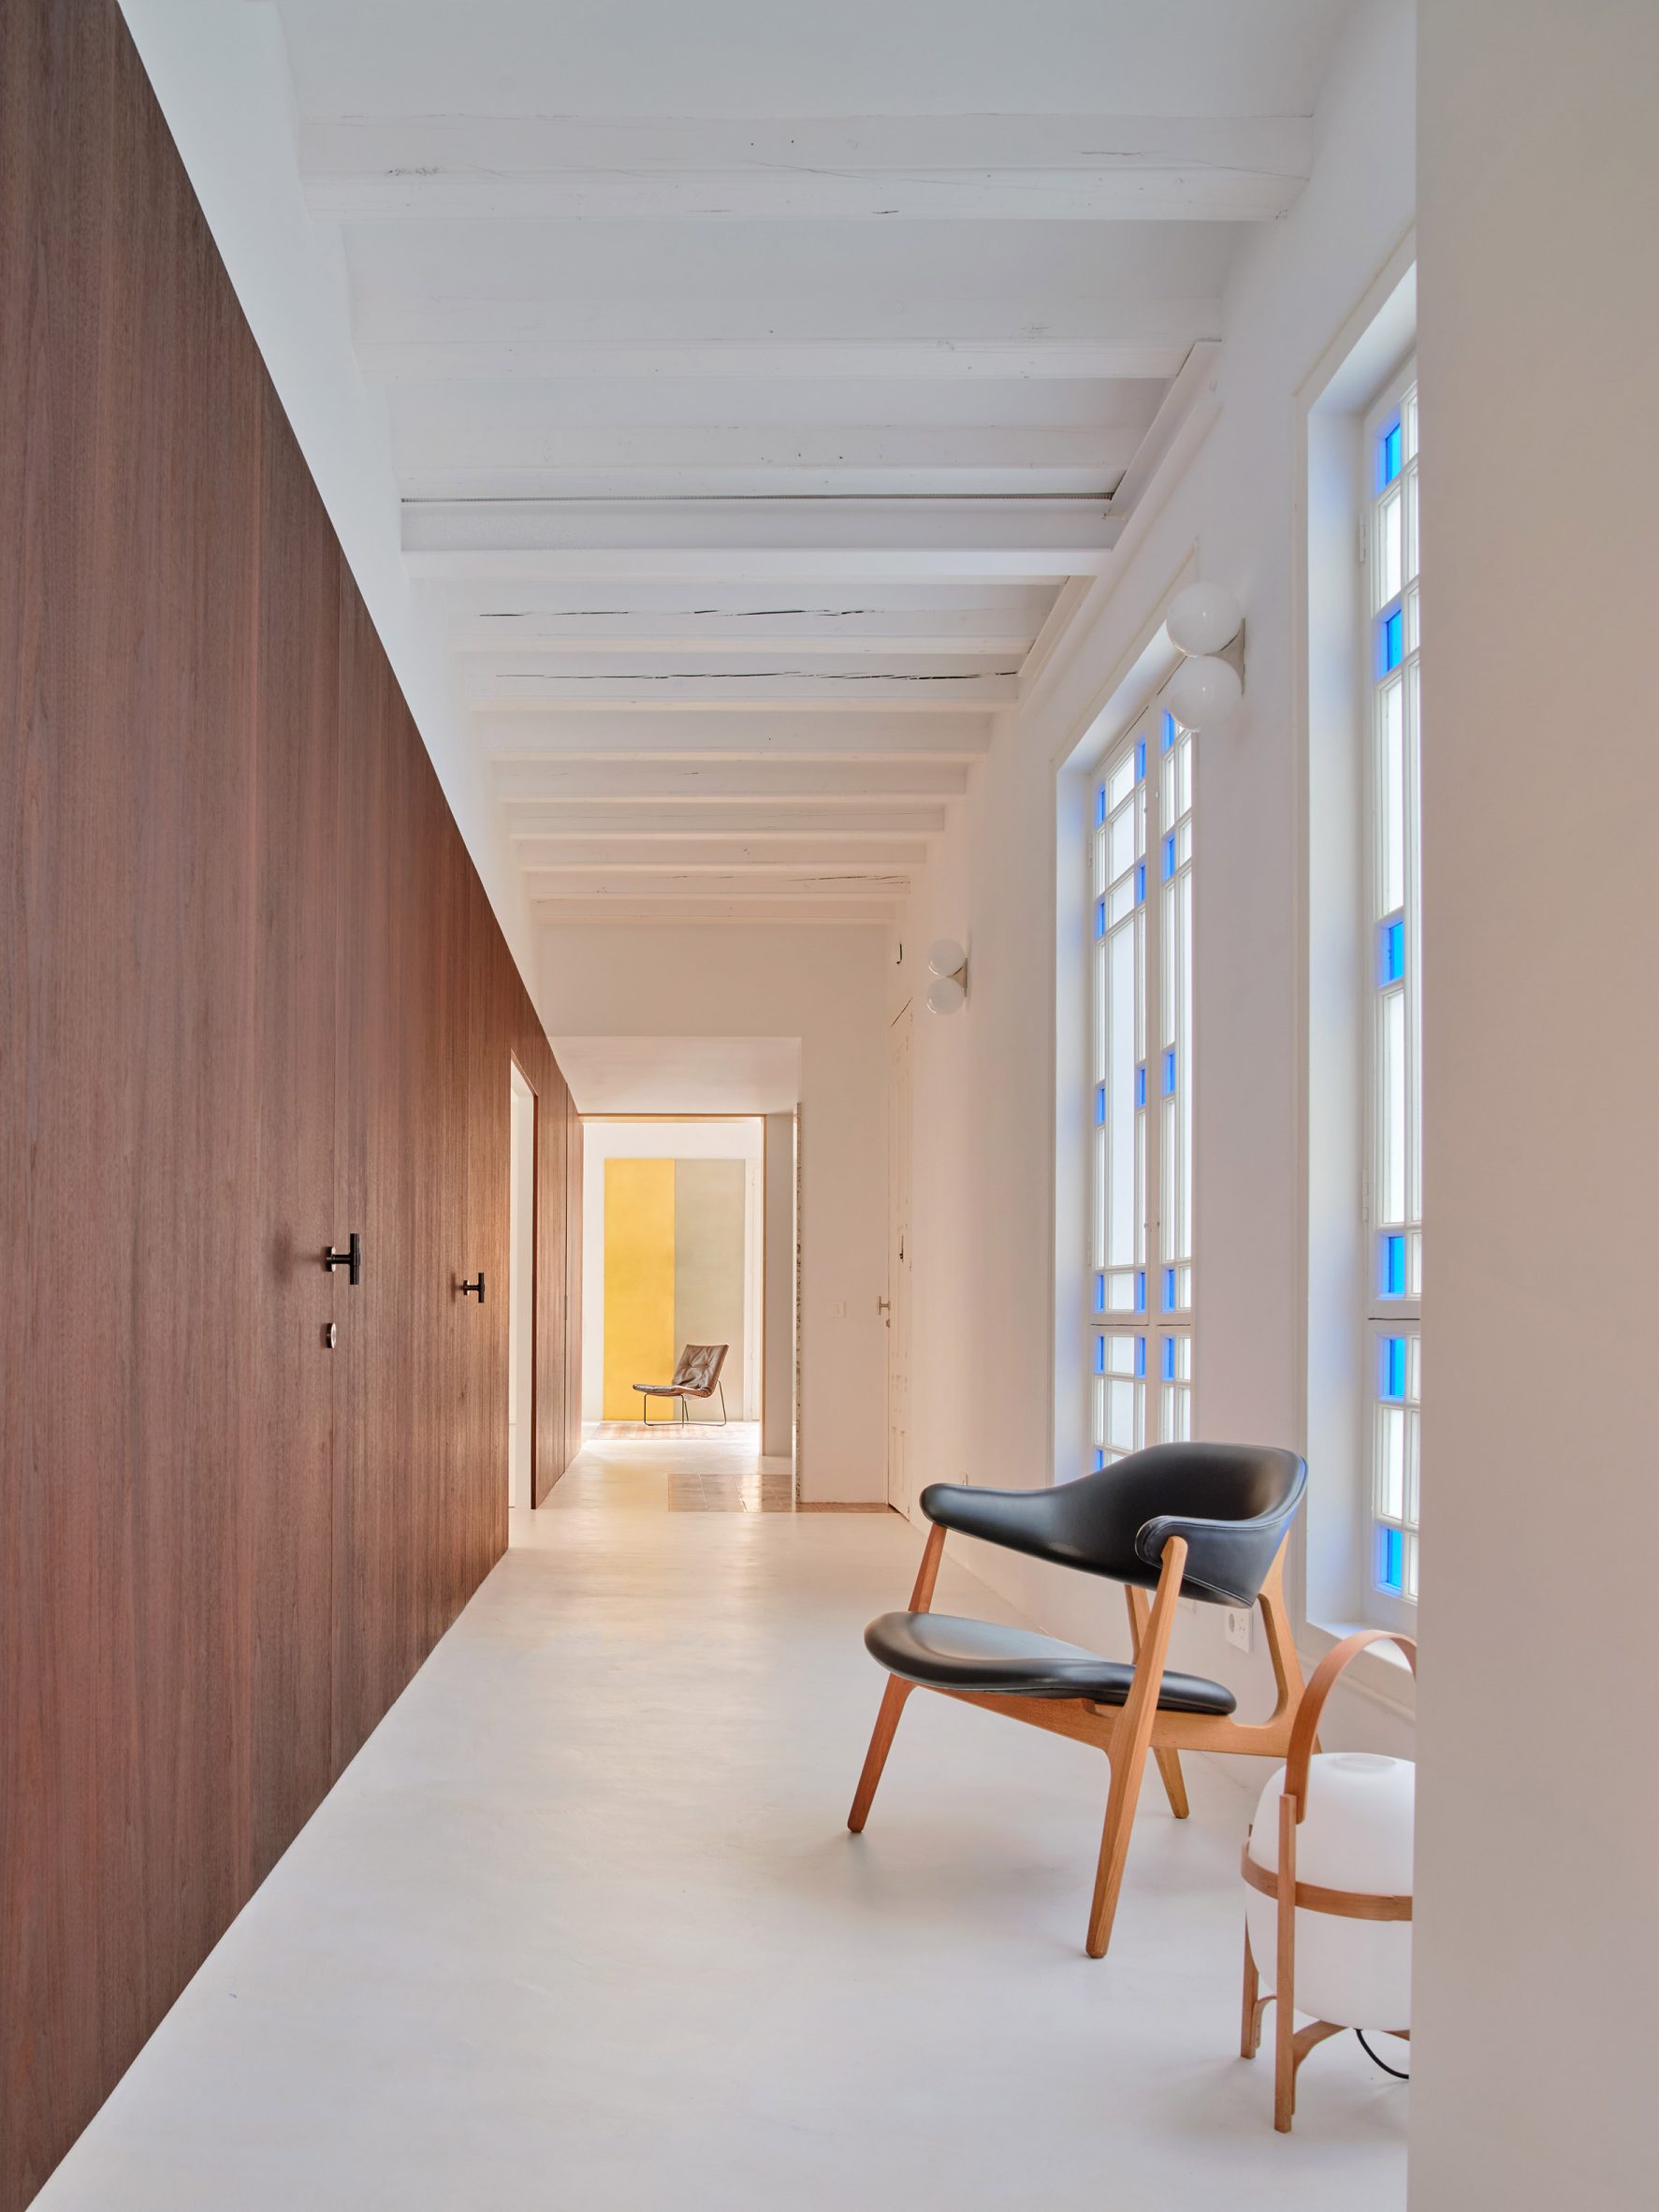 Apartment designed by Raúl Sanchez Architects features walnut wood wall